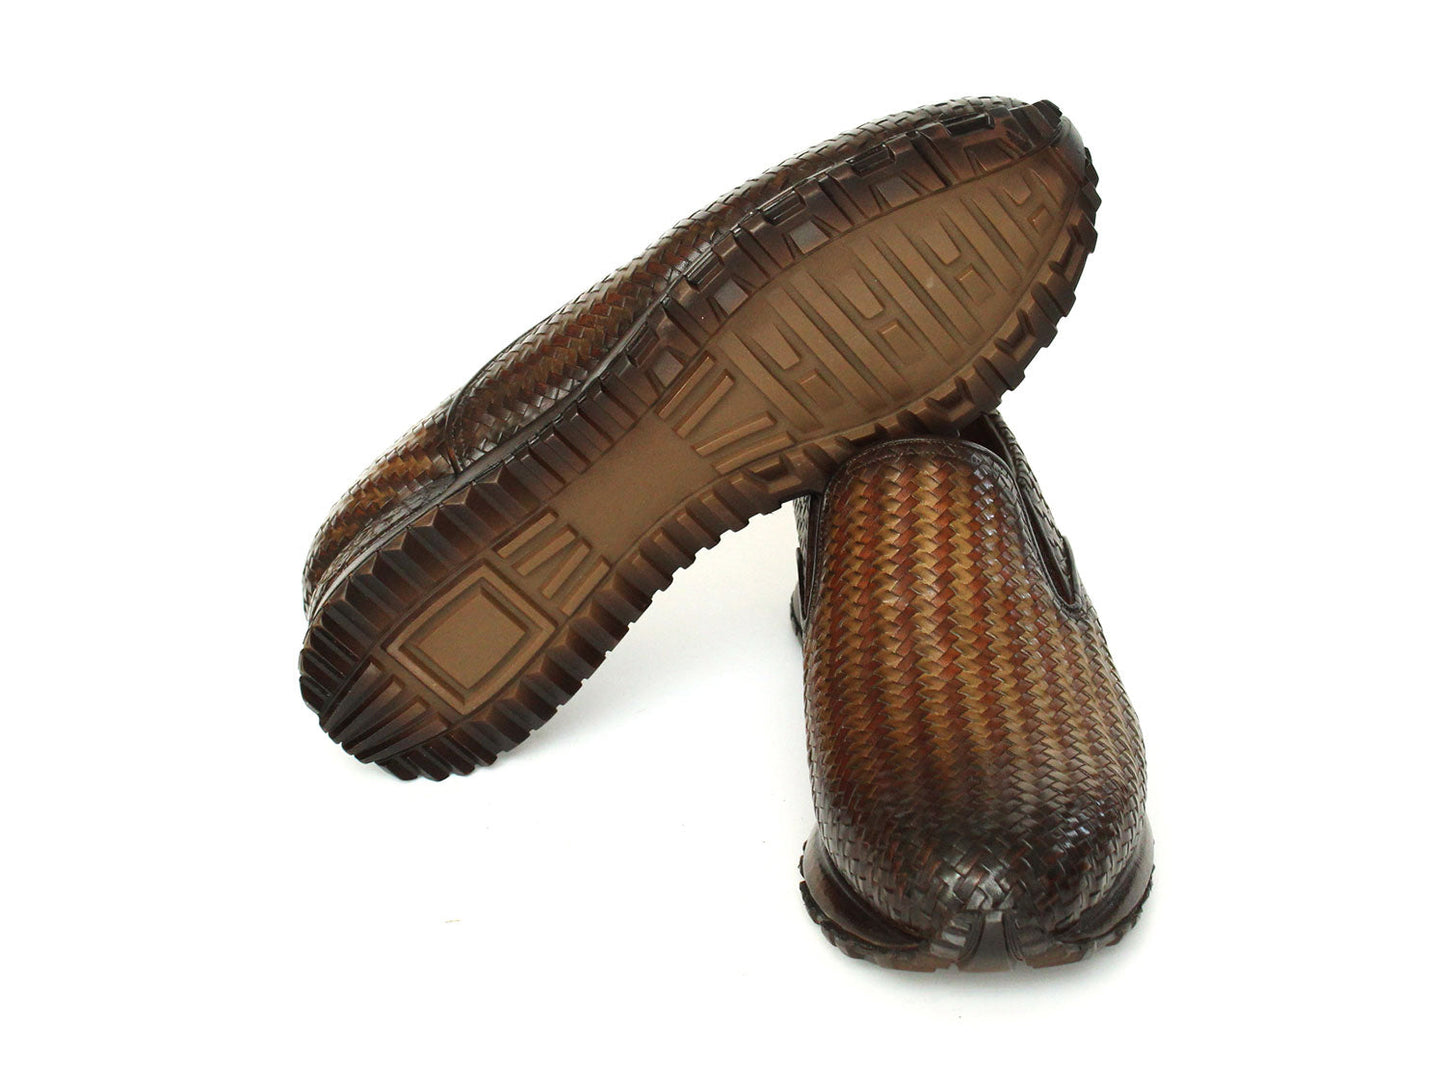 Paul Parkman Men's Brown Woven Leather Slip-On Sneakers (ID#LW204BRW)